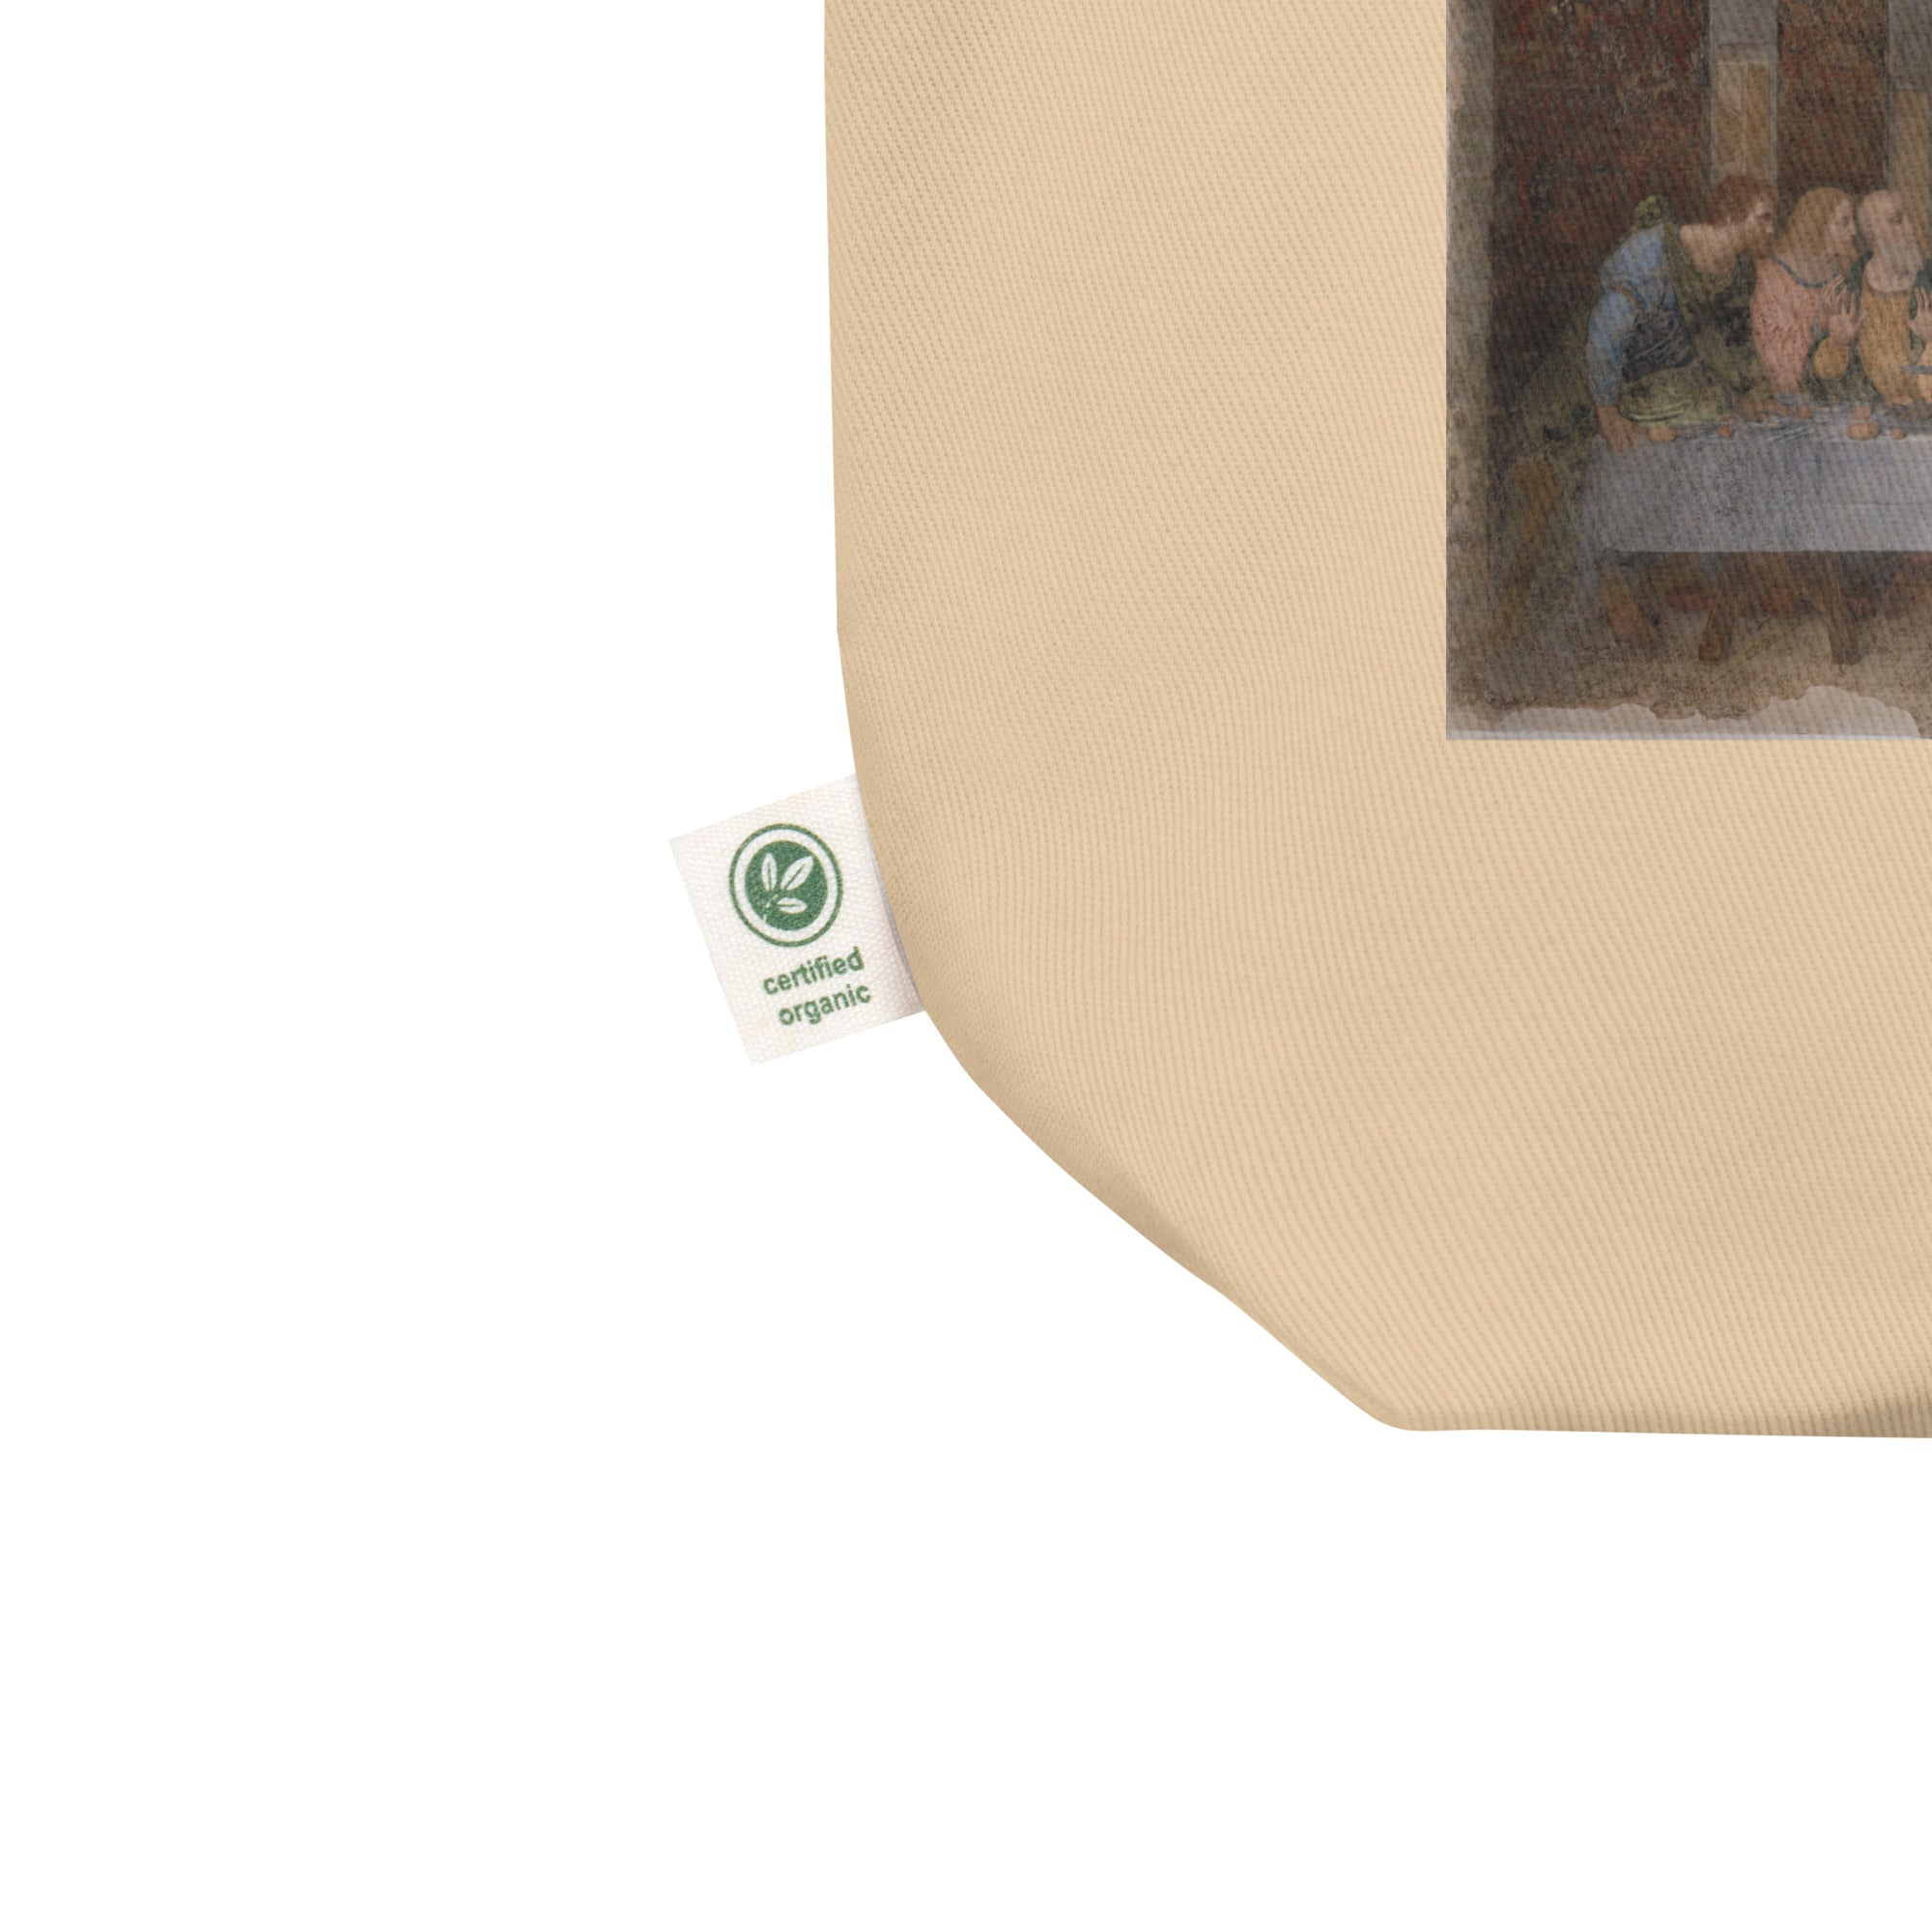 Leonardo da Vinci 'The Last Supper' Famous Painting Totebag | Eco Friendly Art Tote Bag